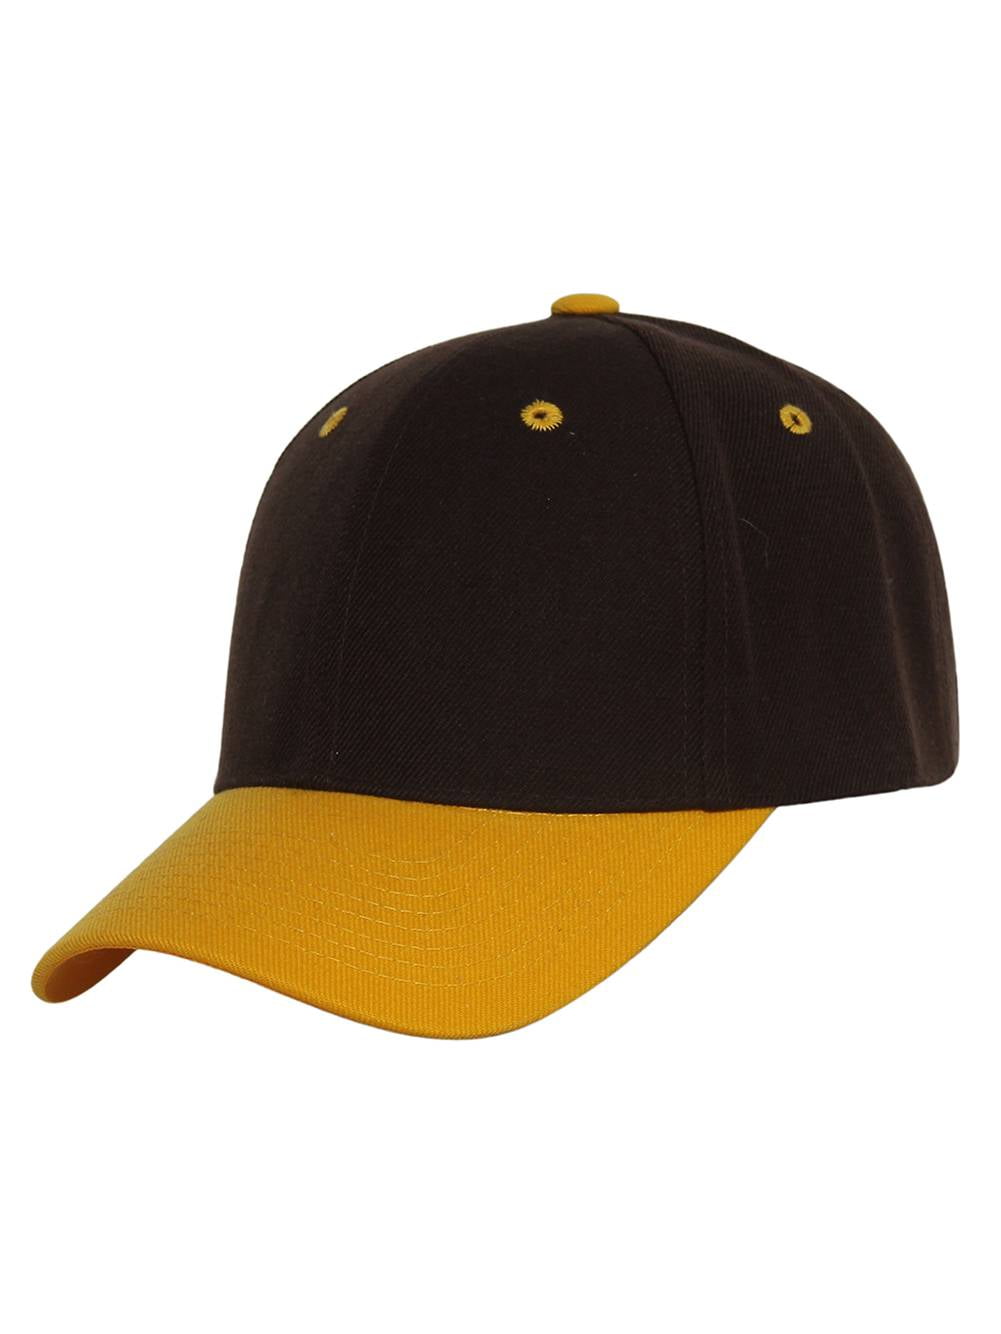 Cap, Two-Tone Yellow Adjustable Brown Baseball